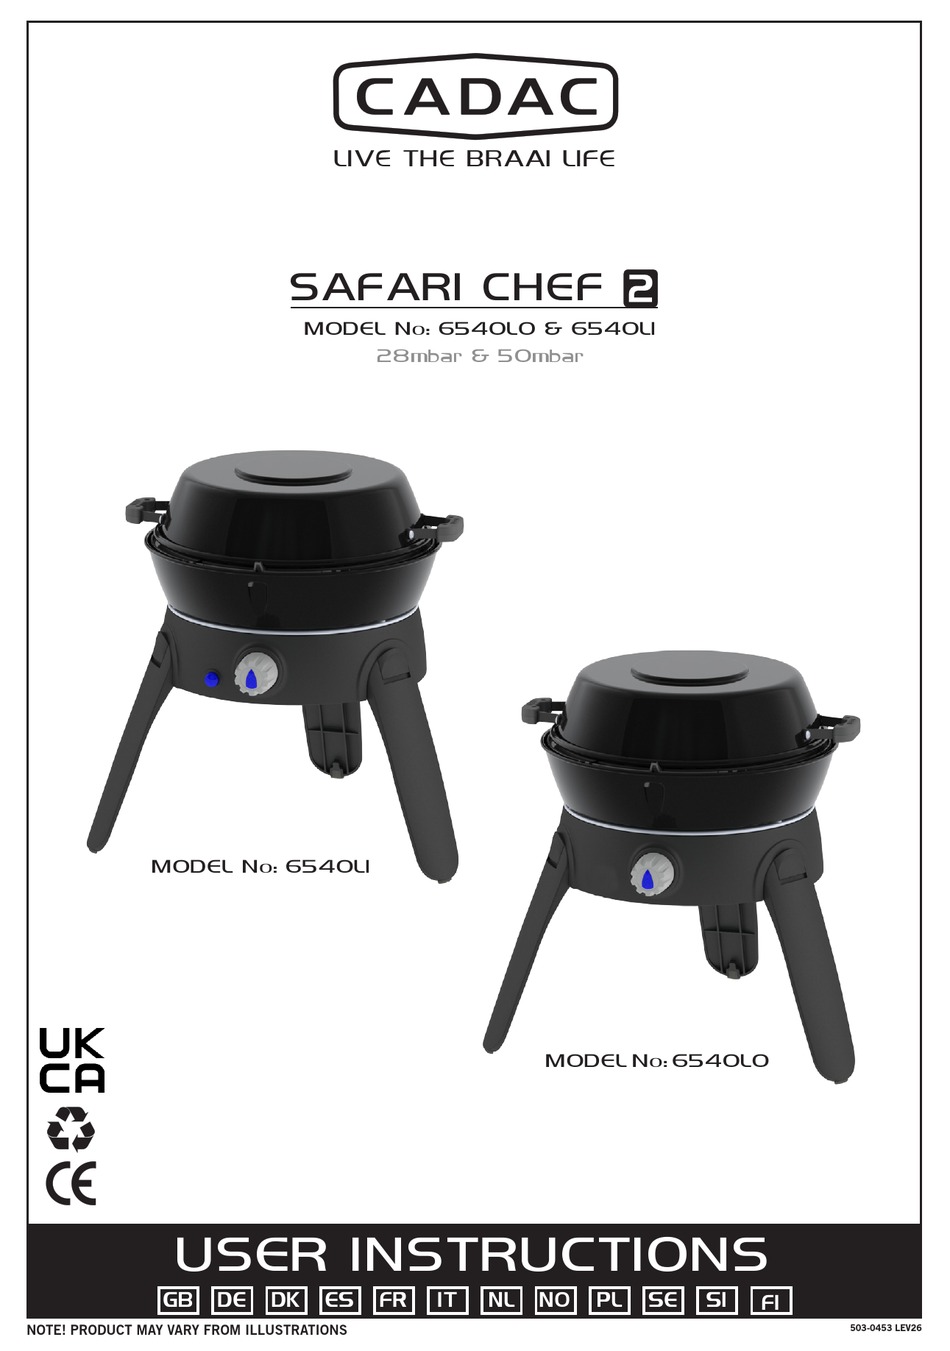 cadac safari chef 2 parts list ebay